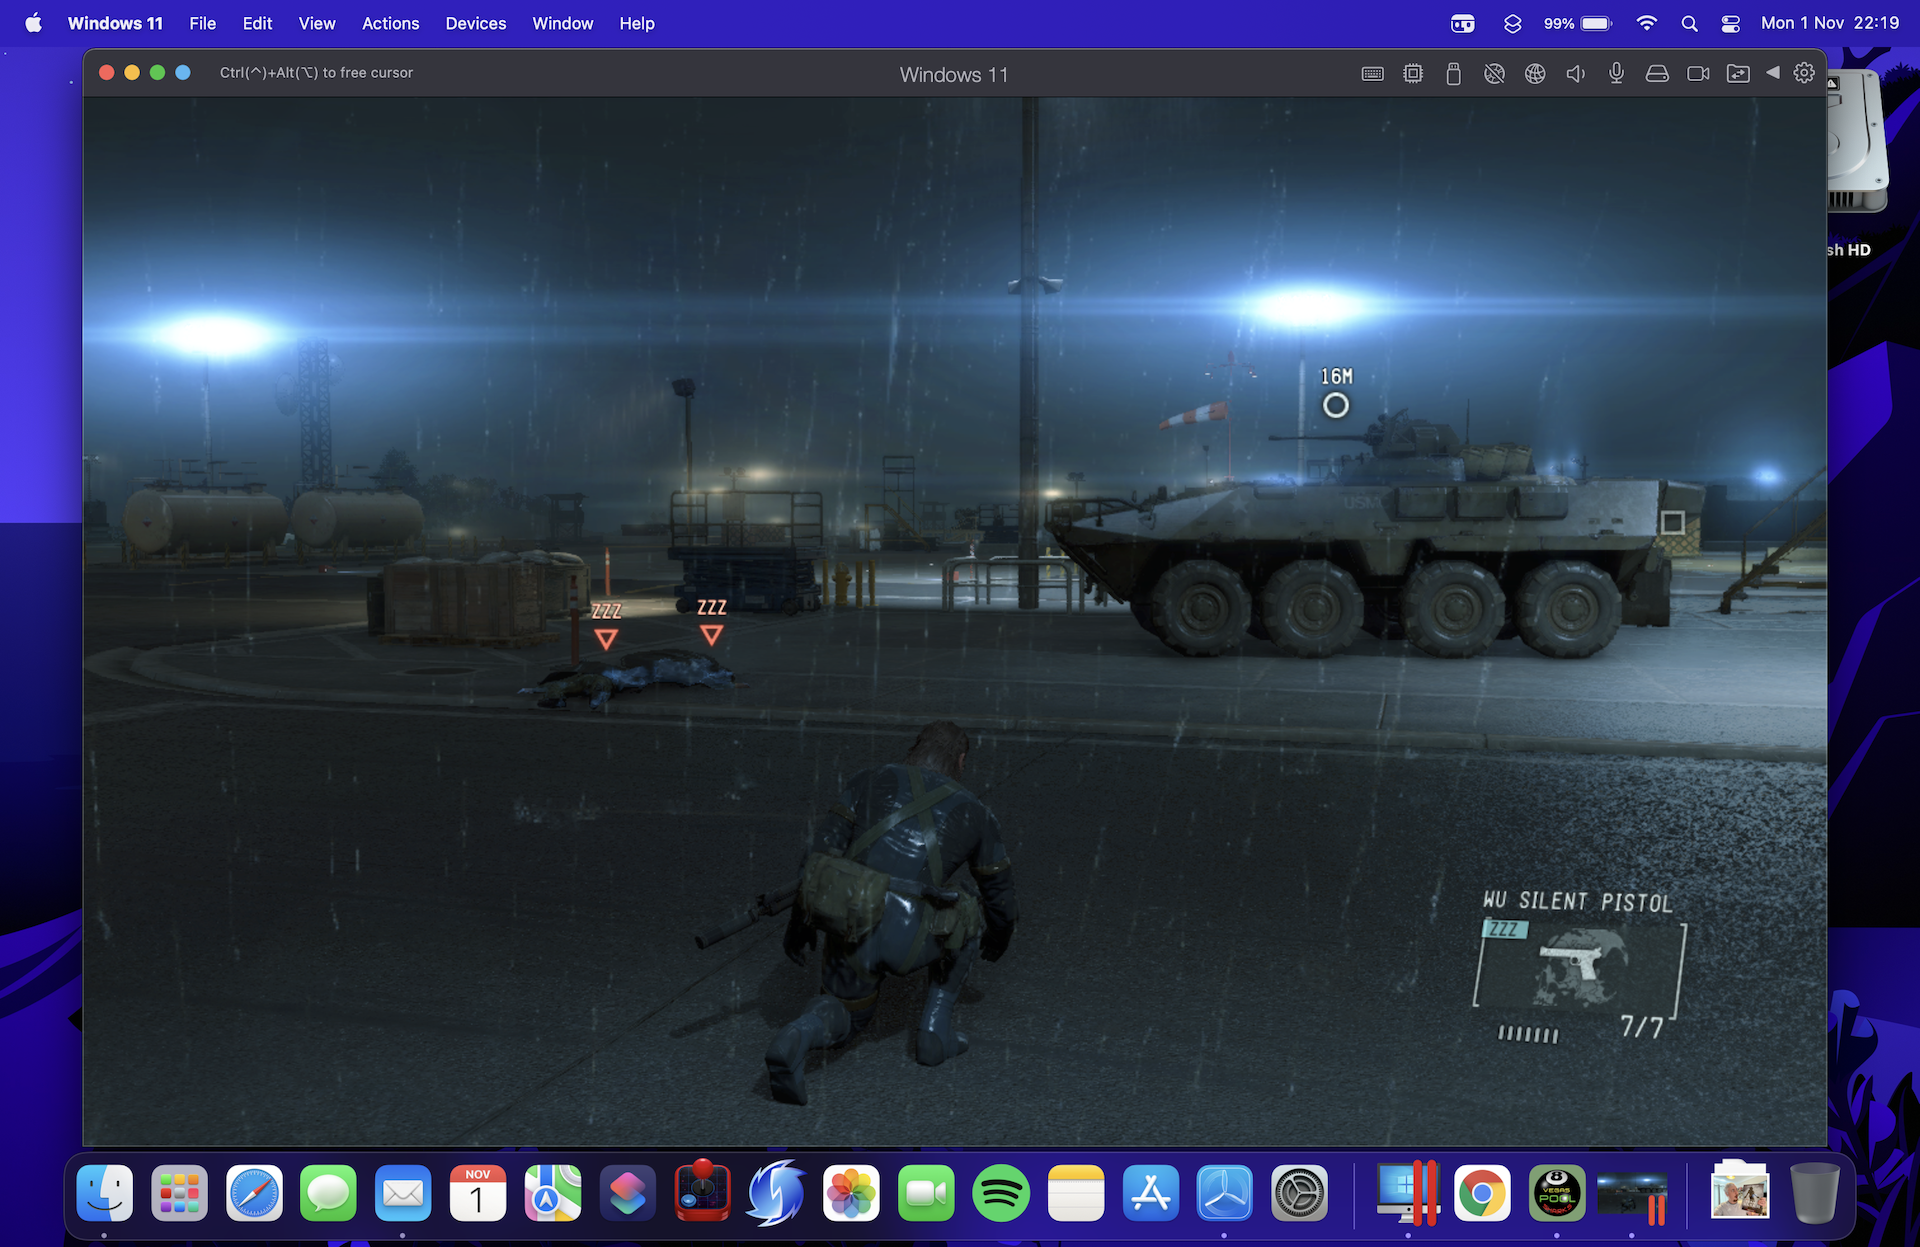 Metal Gear Solid 5: Ground Zeroes running on M1 Pro, Parallels Desktop 17